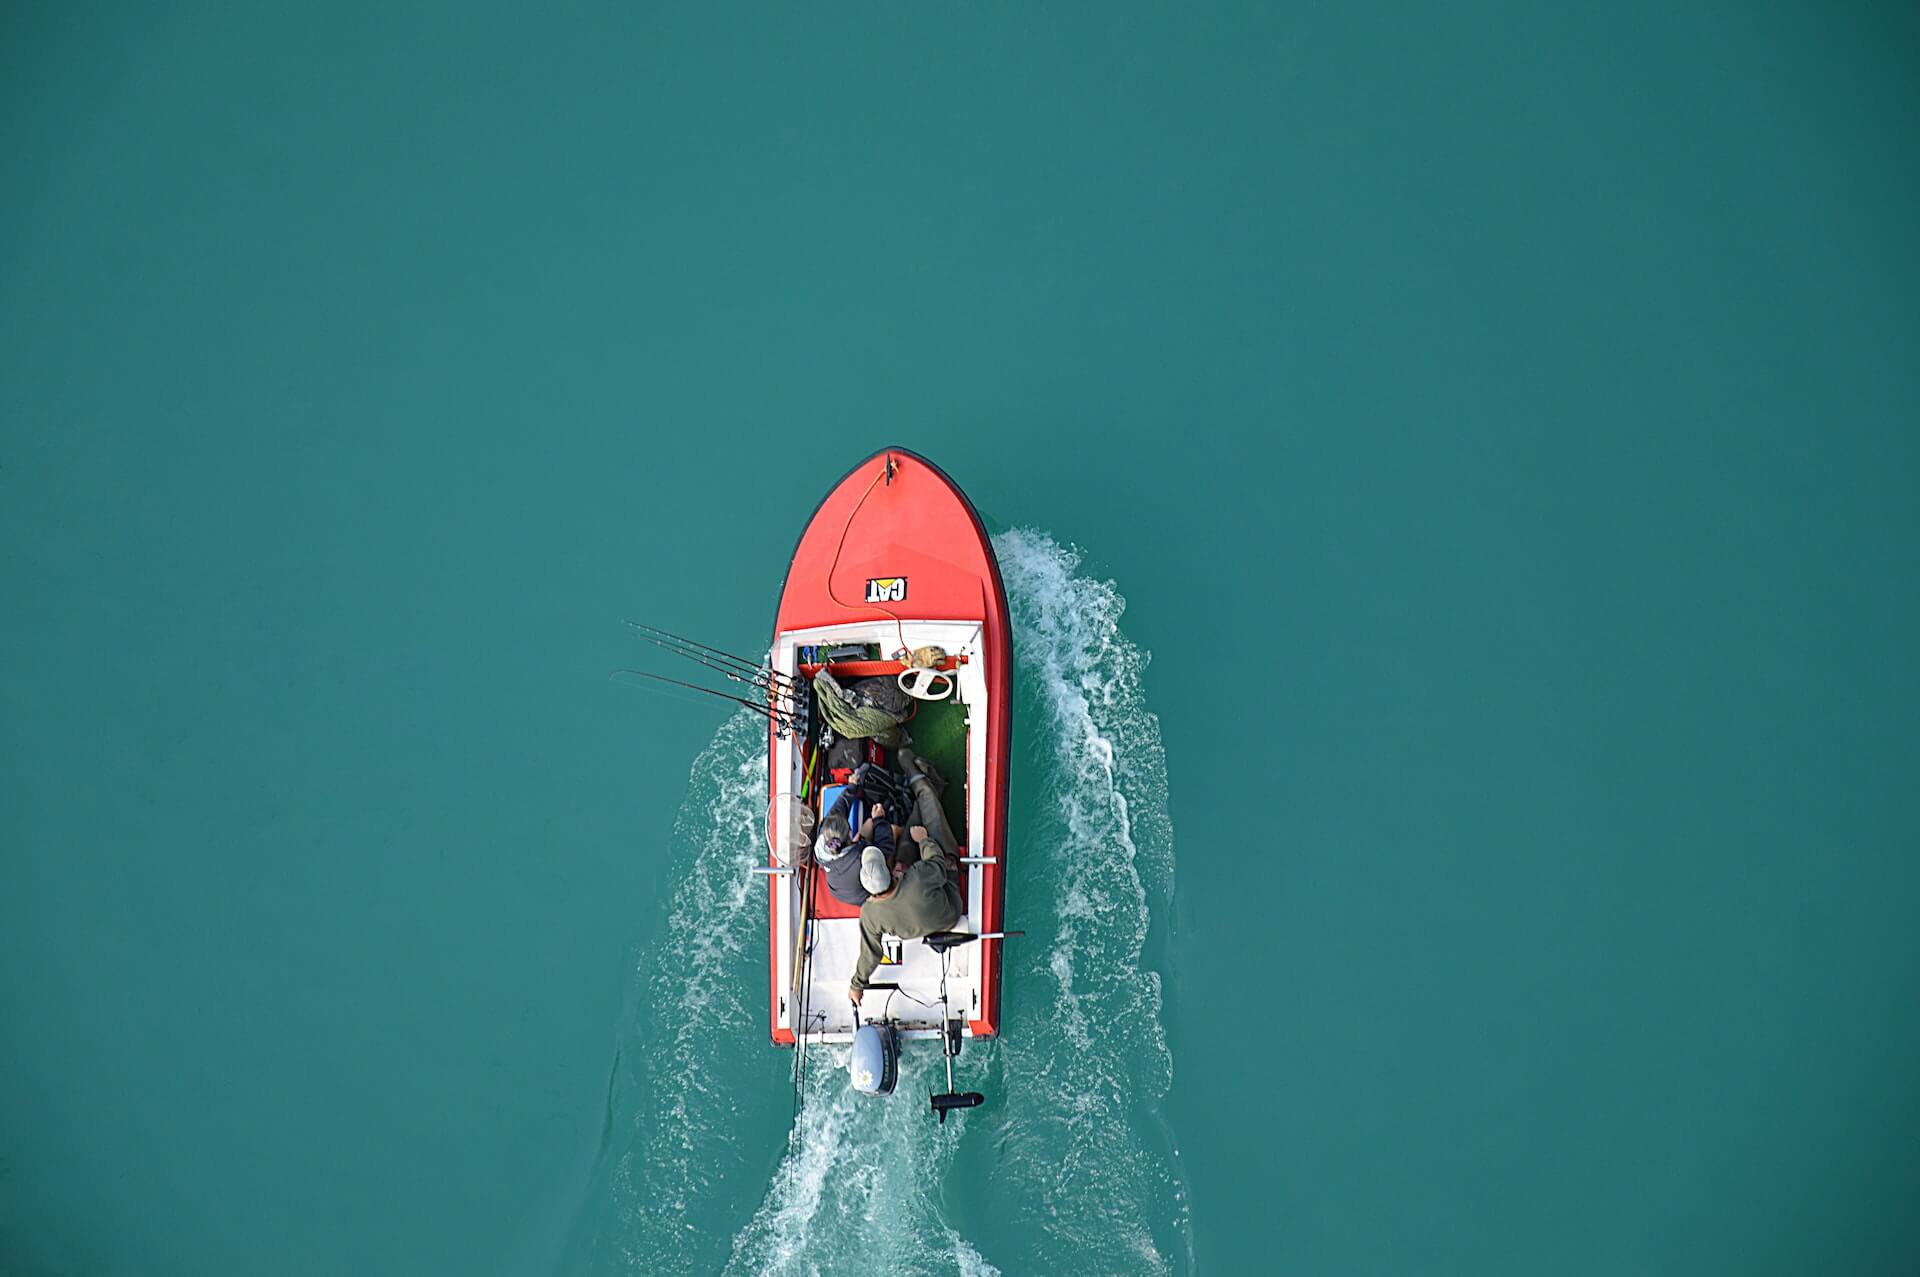 Fishermen on a boat